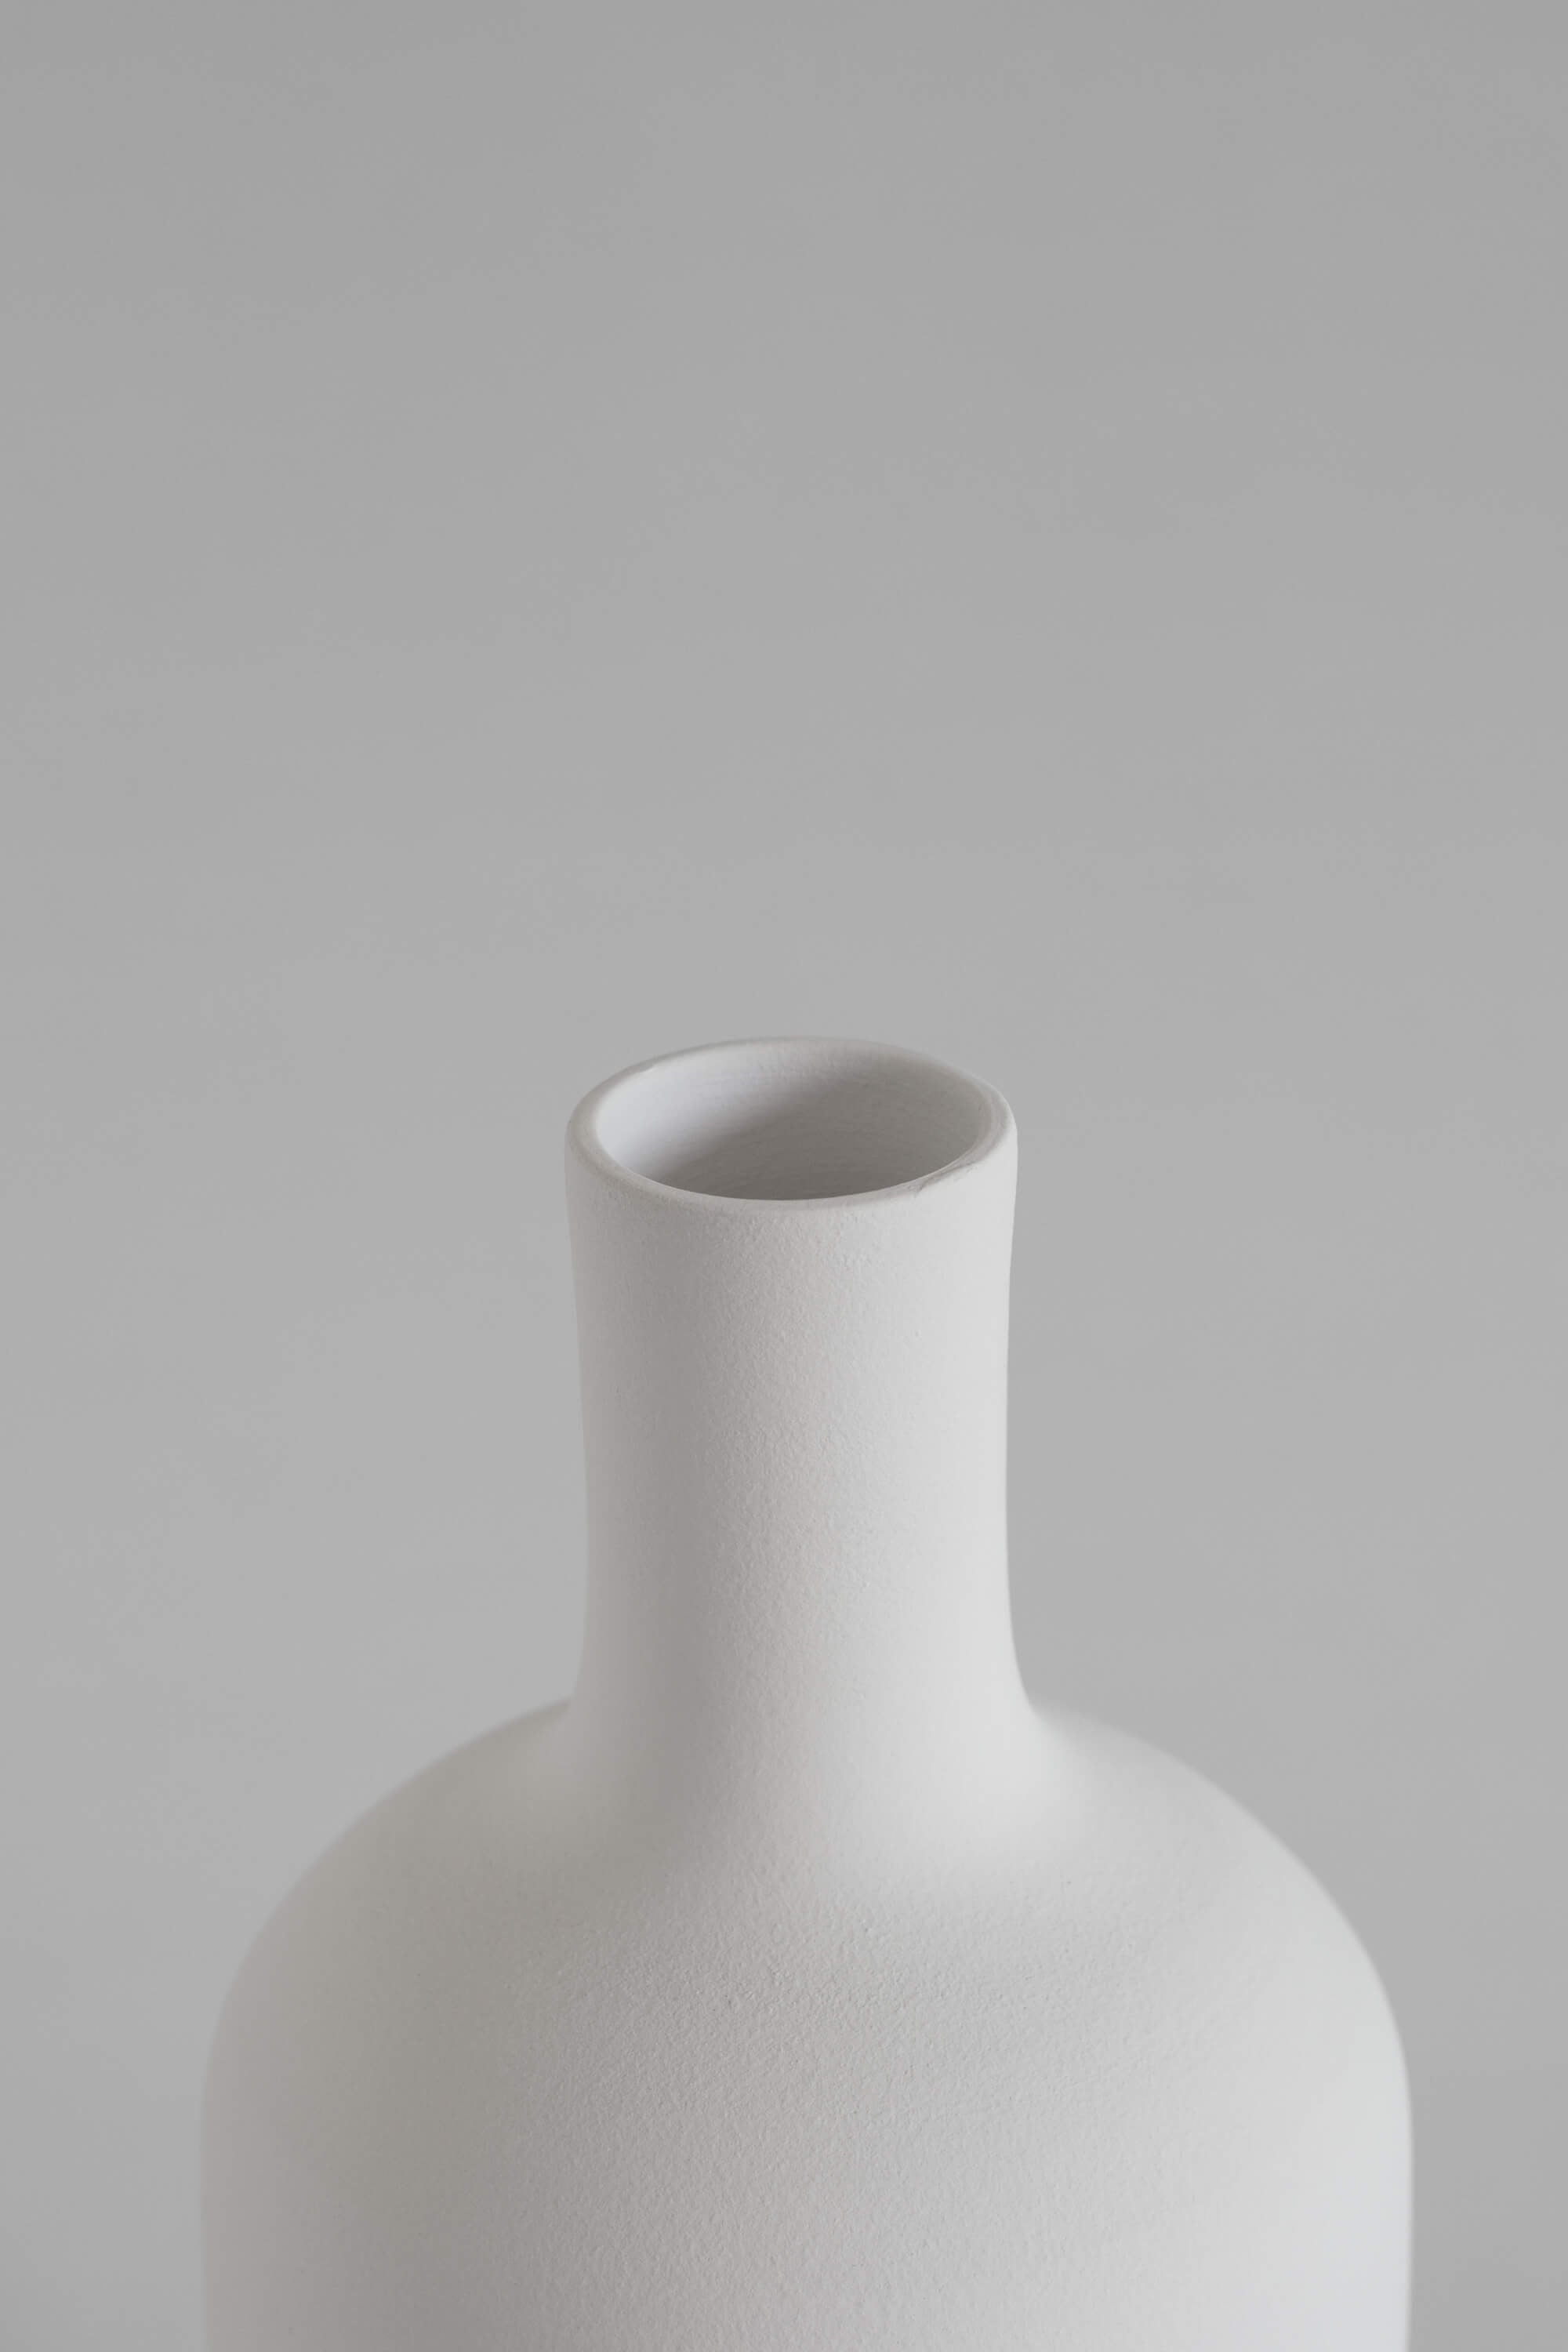 Blanc Collection 02 Vase | White | Handmade Earthenware |  by O Cactuu - Lifestory - O Cactuu